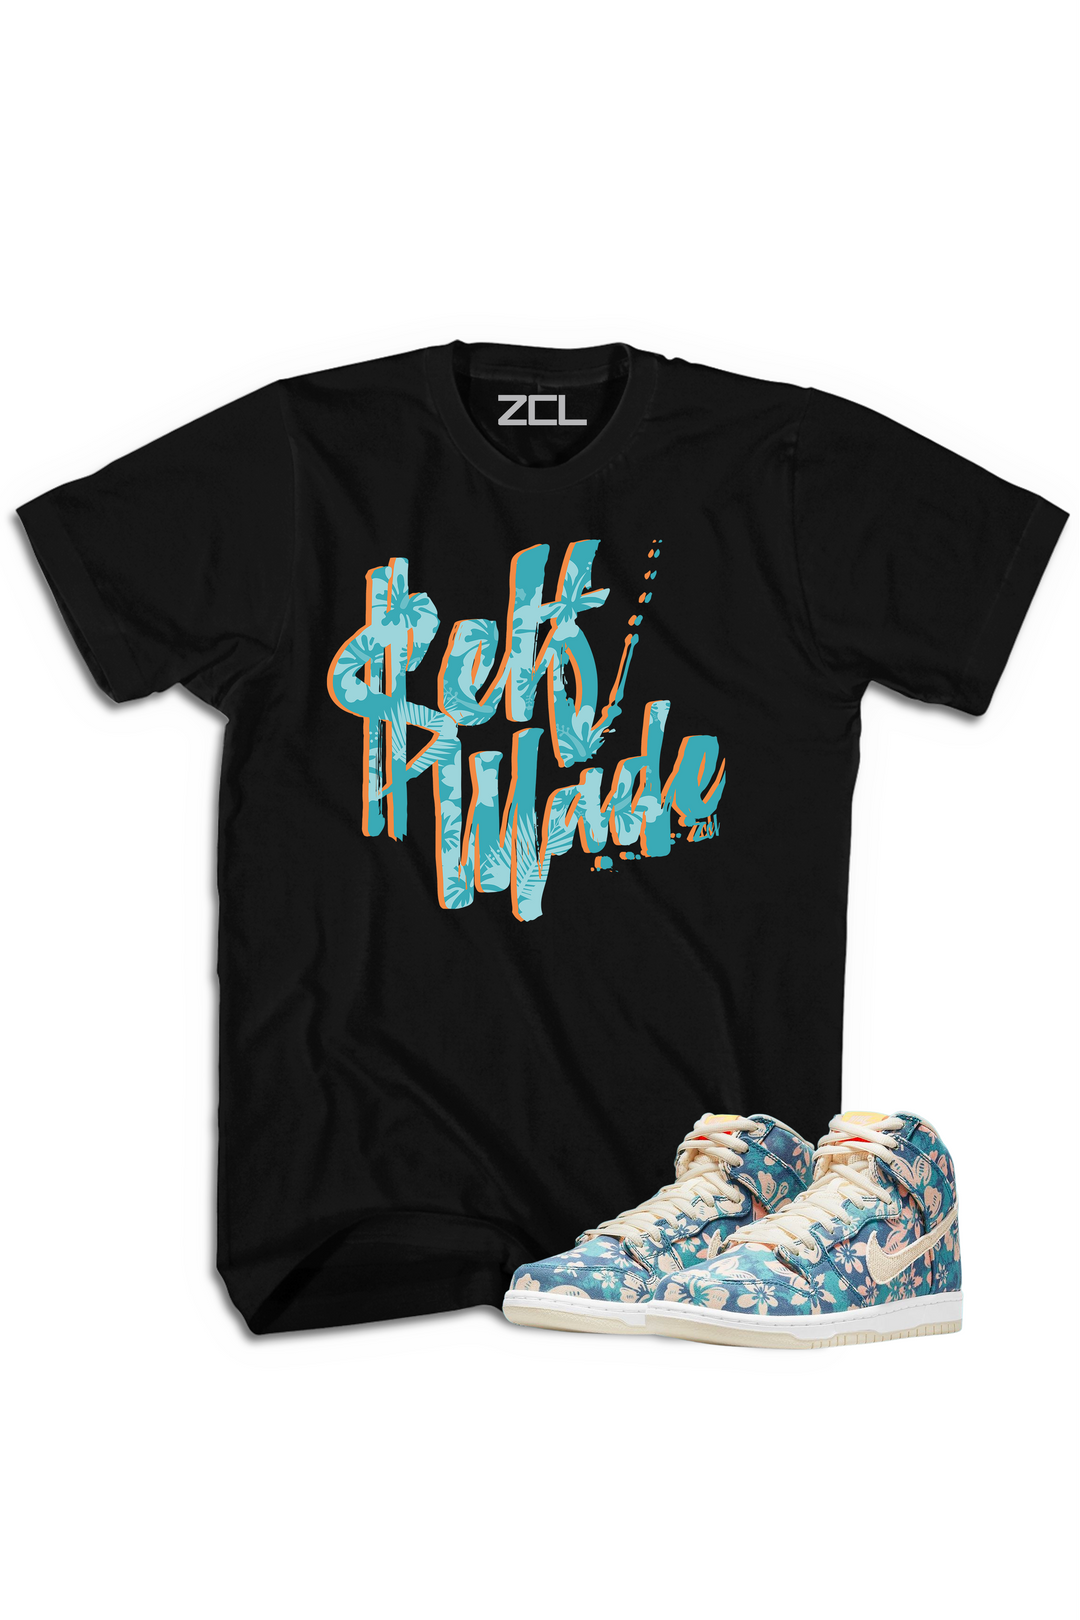 Nike SB Dunk High "Self Made" Tee Hawaii - Zamage